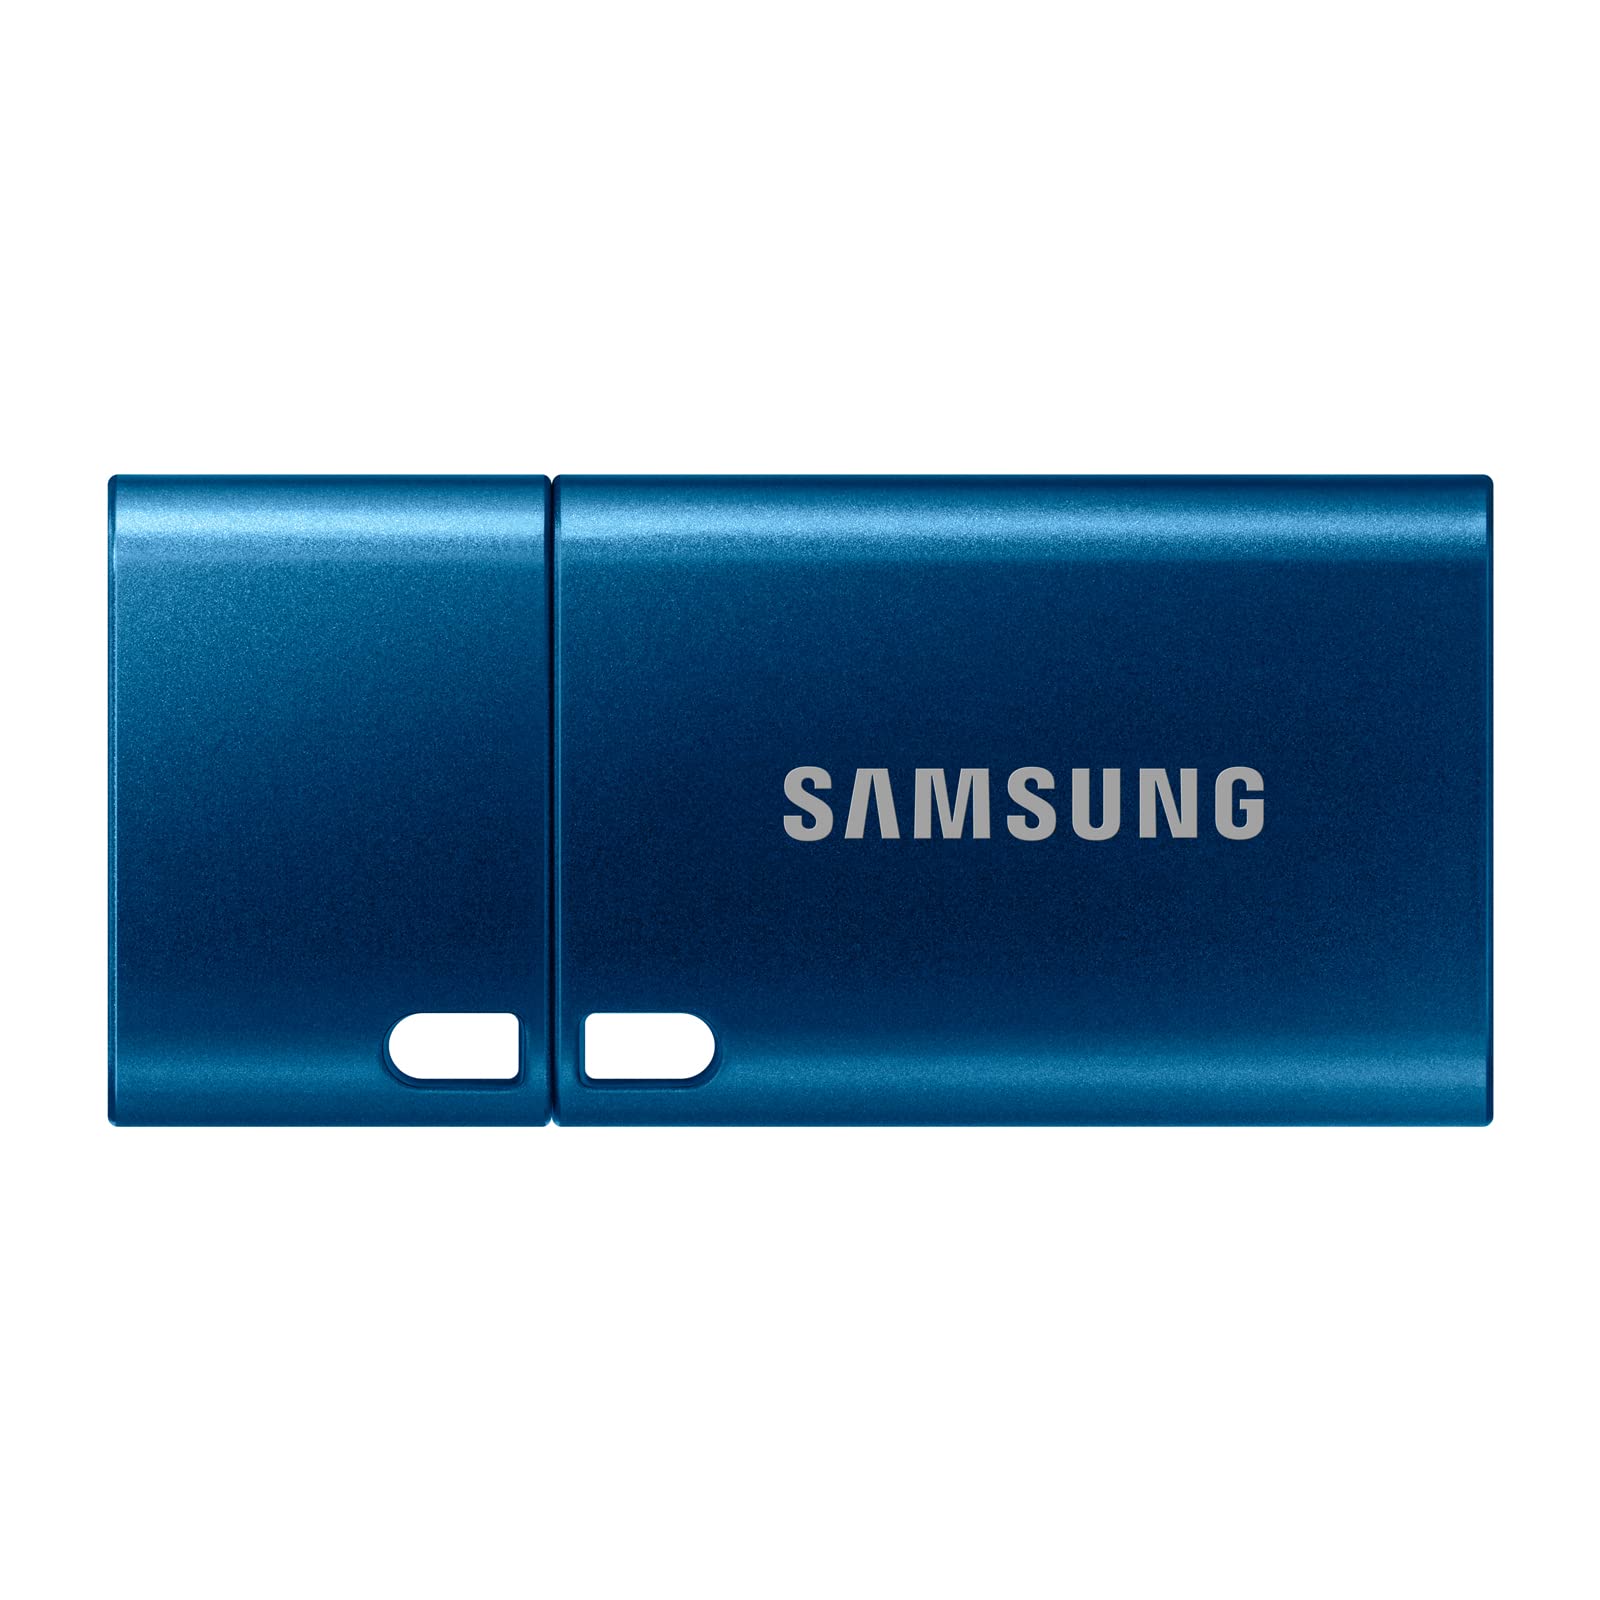 Samsung USBメモリ Type-C 128GB 最大転送速度400MB/s Flash Drive MUF-128DA/EC 国内正規保証品 青